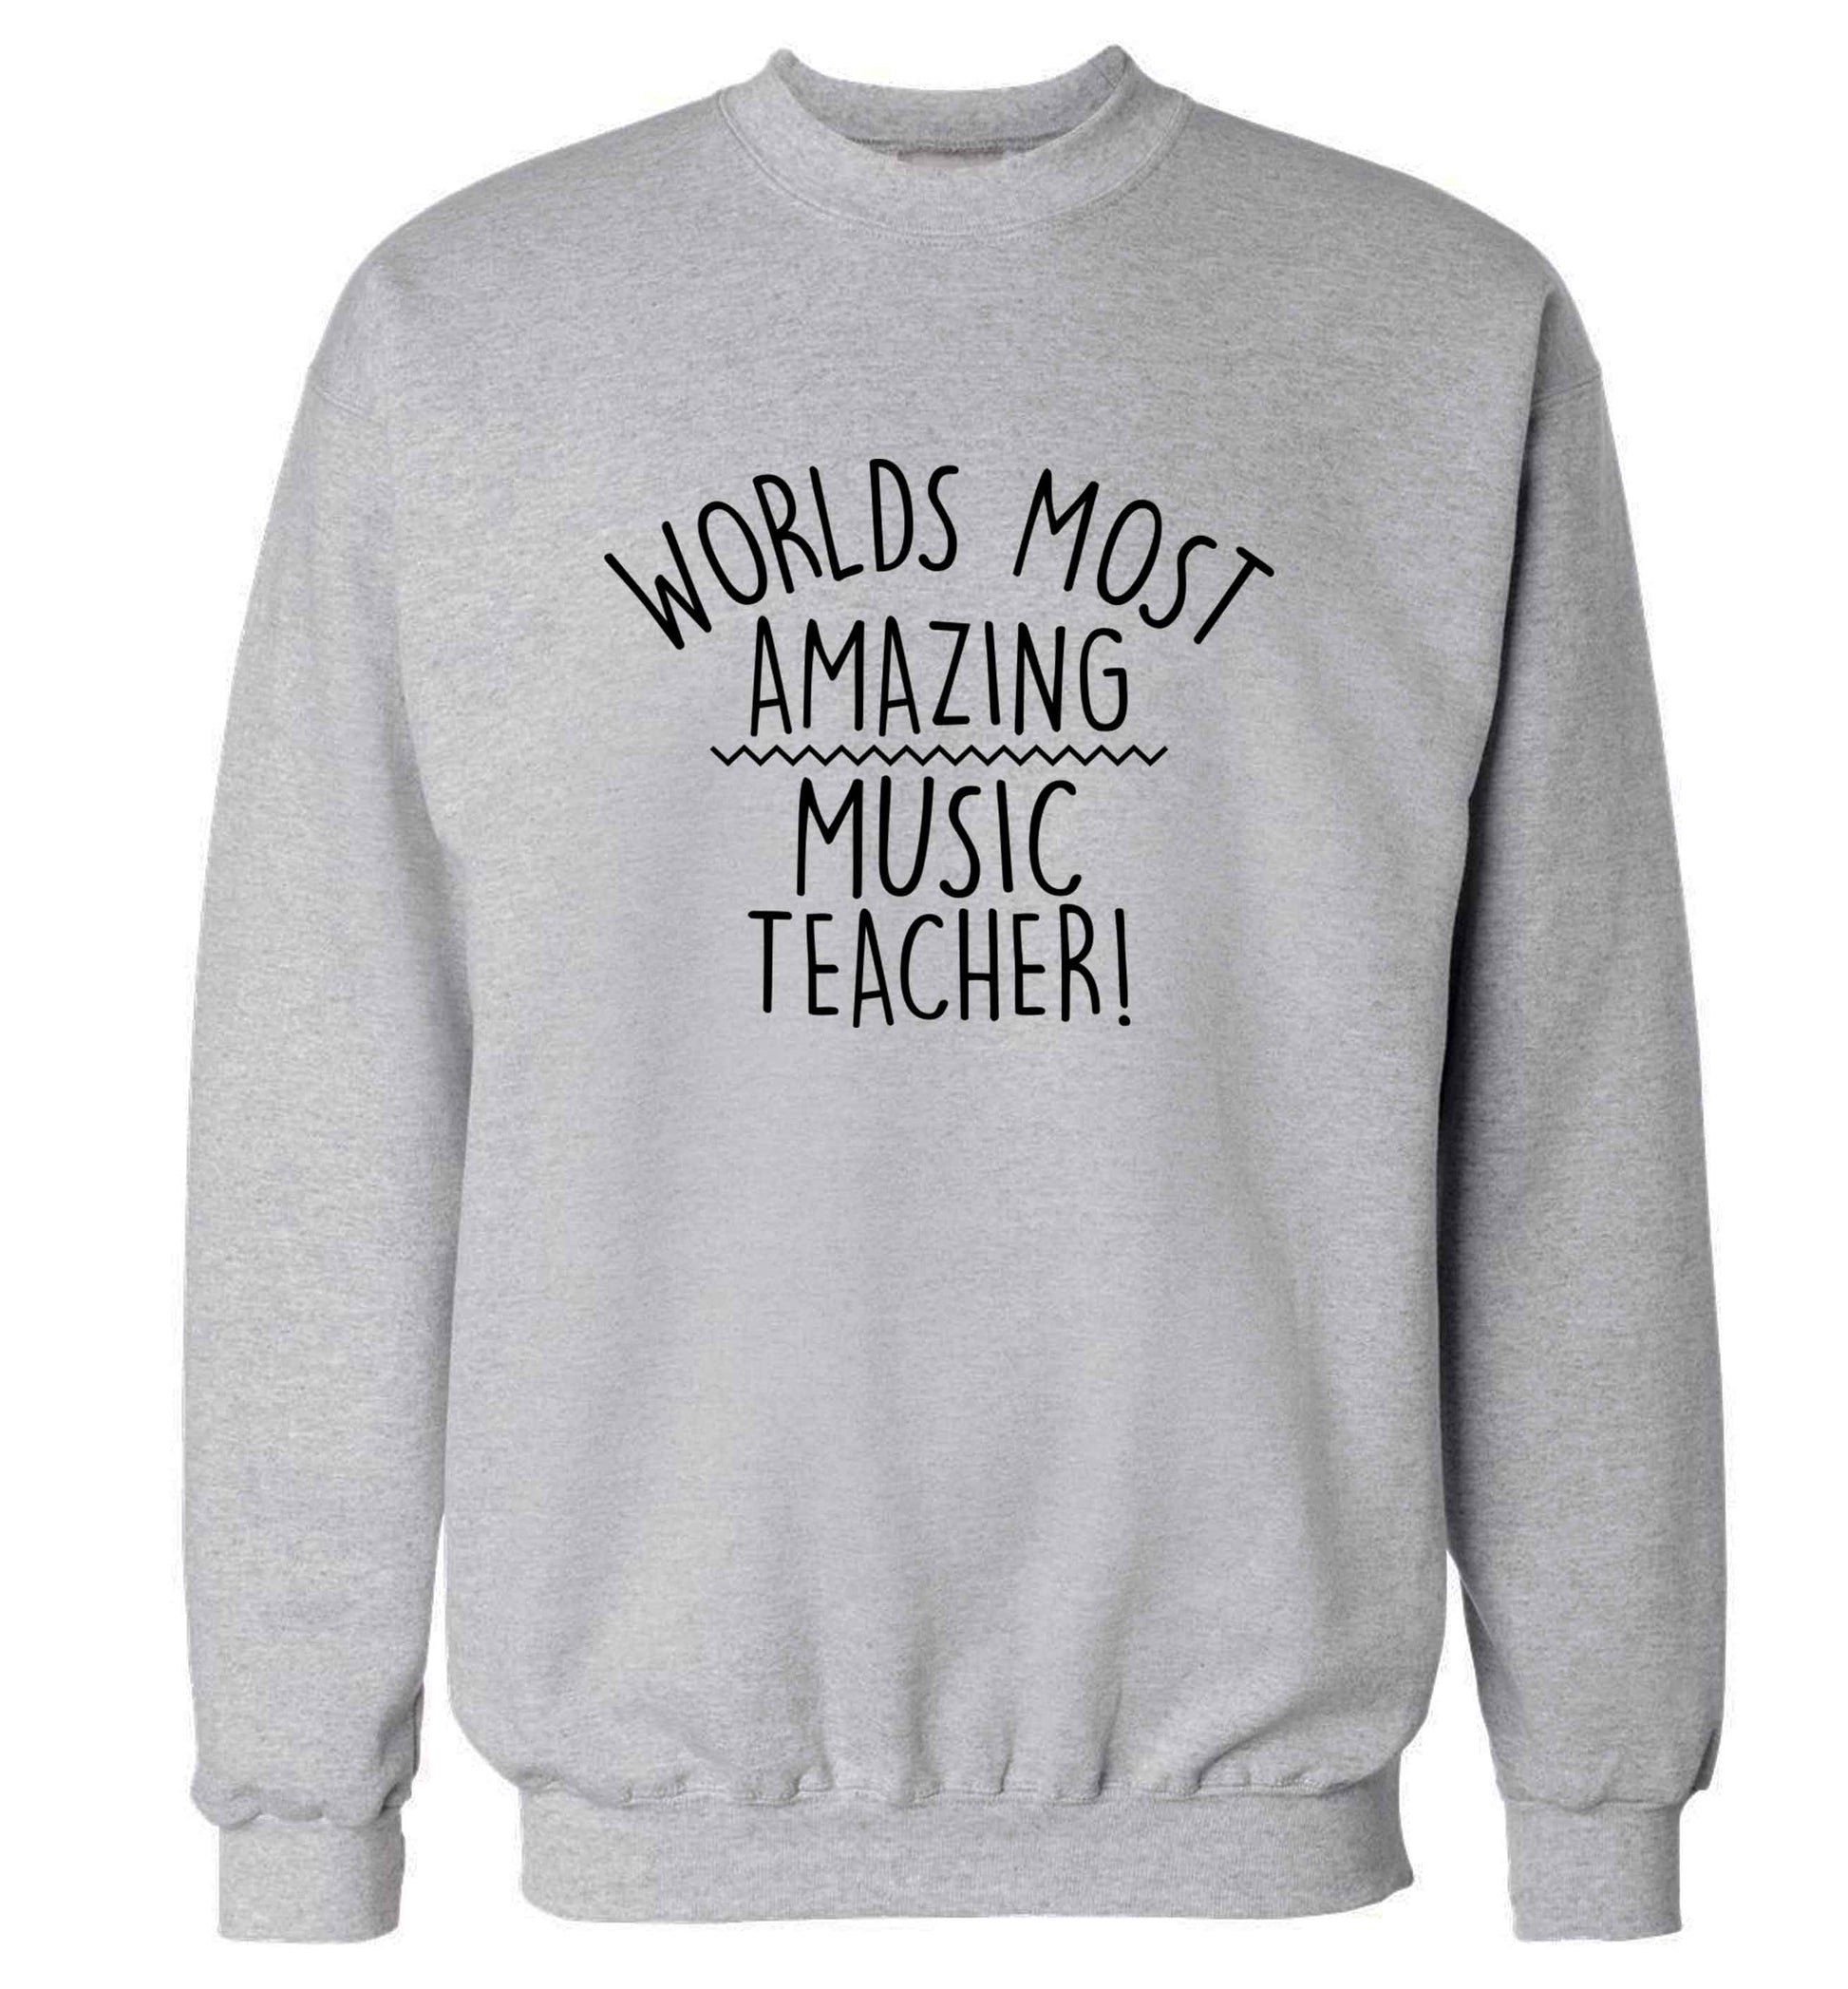 Worlds most amazing music teacher adult's unisex grey sweater 2XL